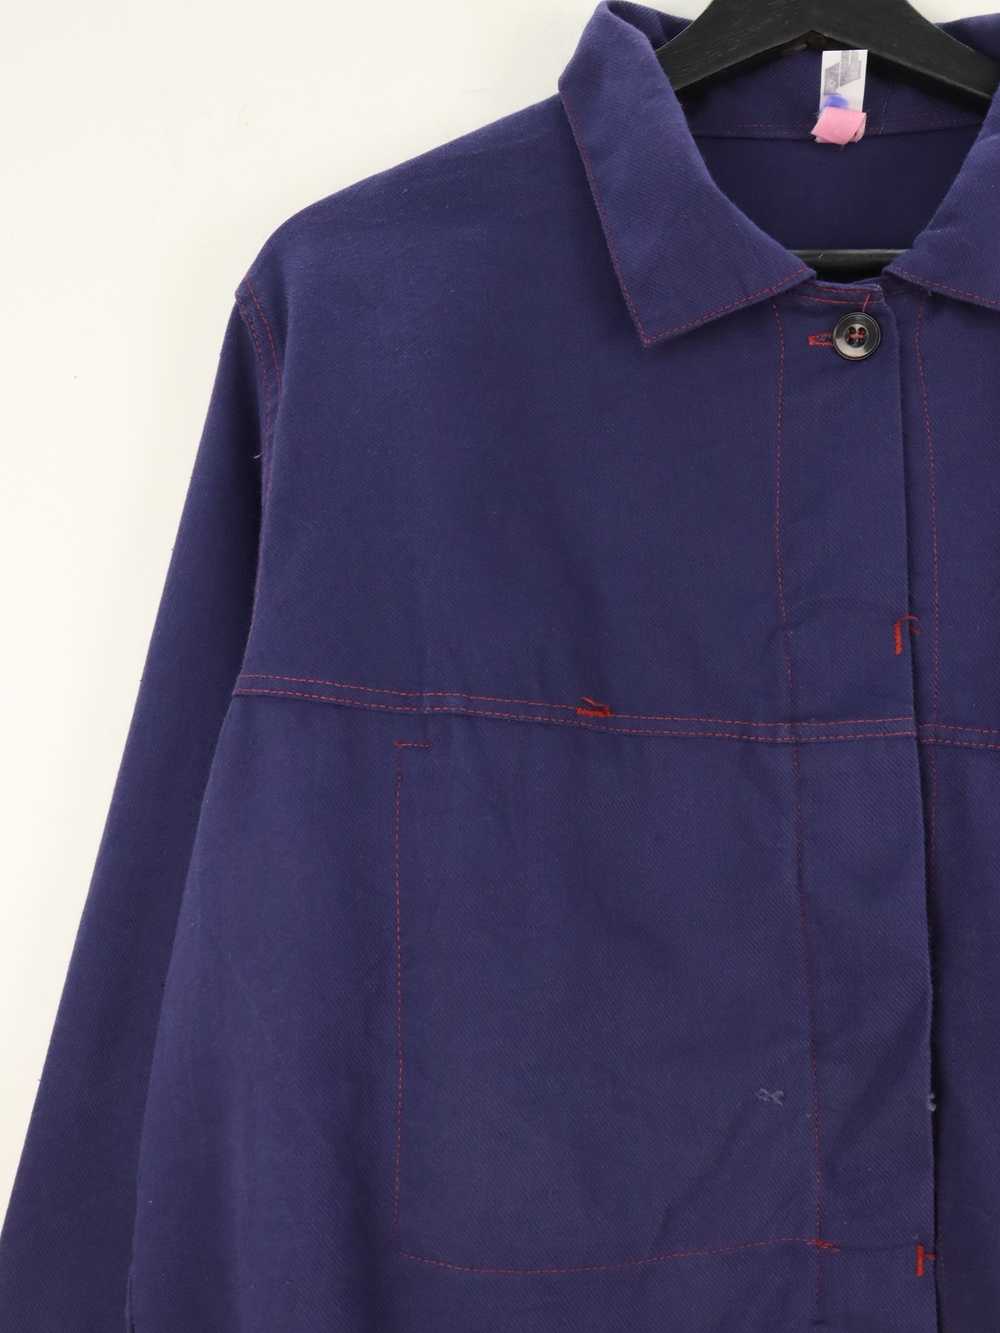 Vintage × Workers Vintage French Workwear Jacket - image 6